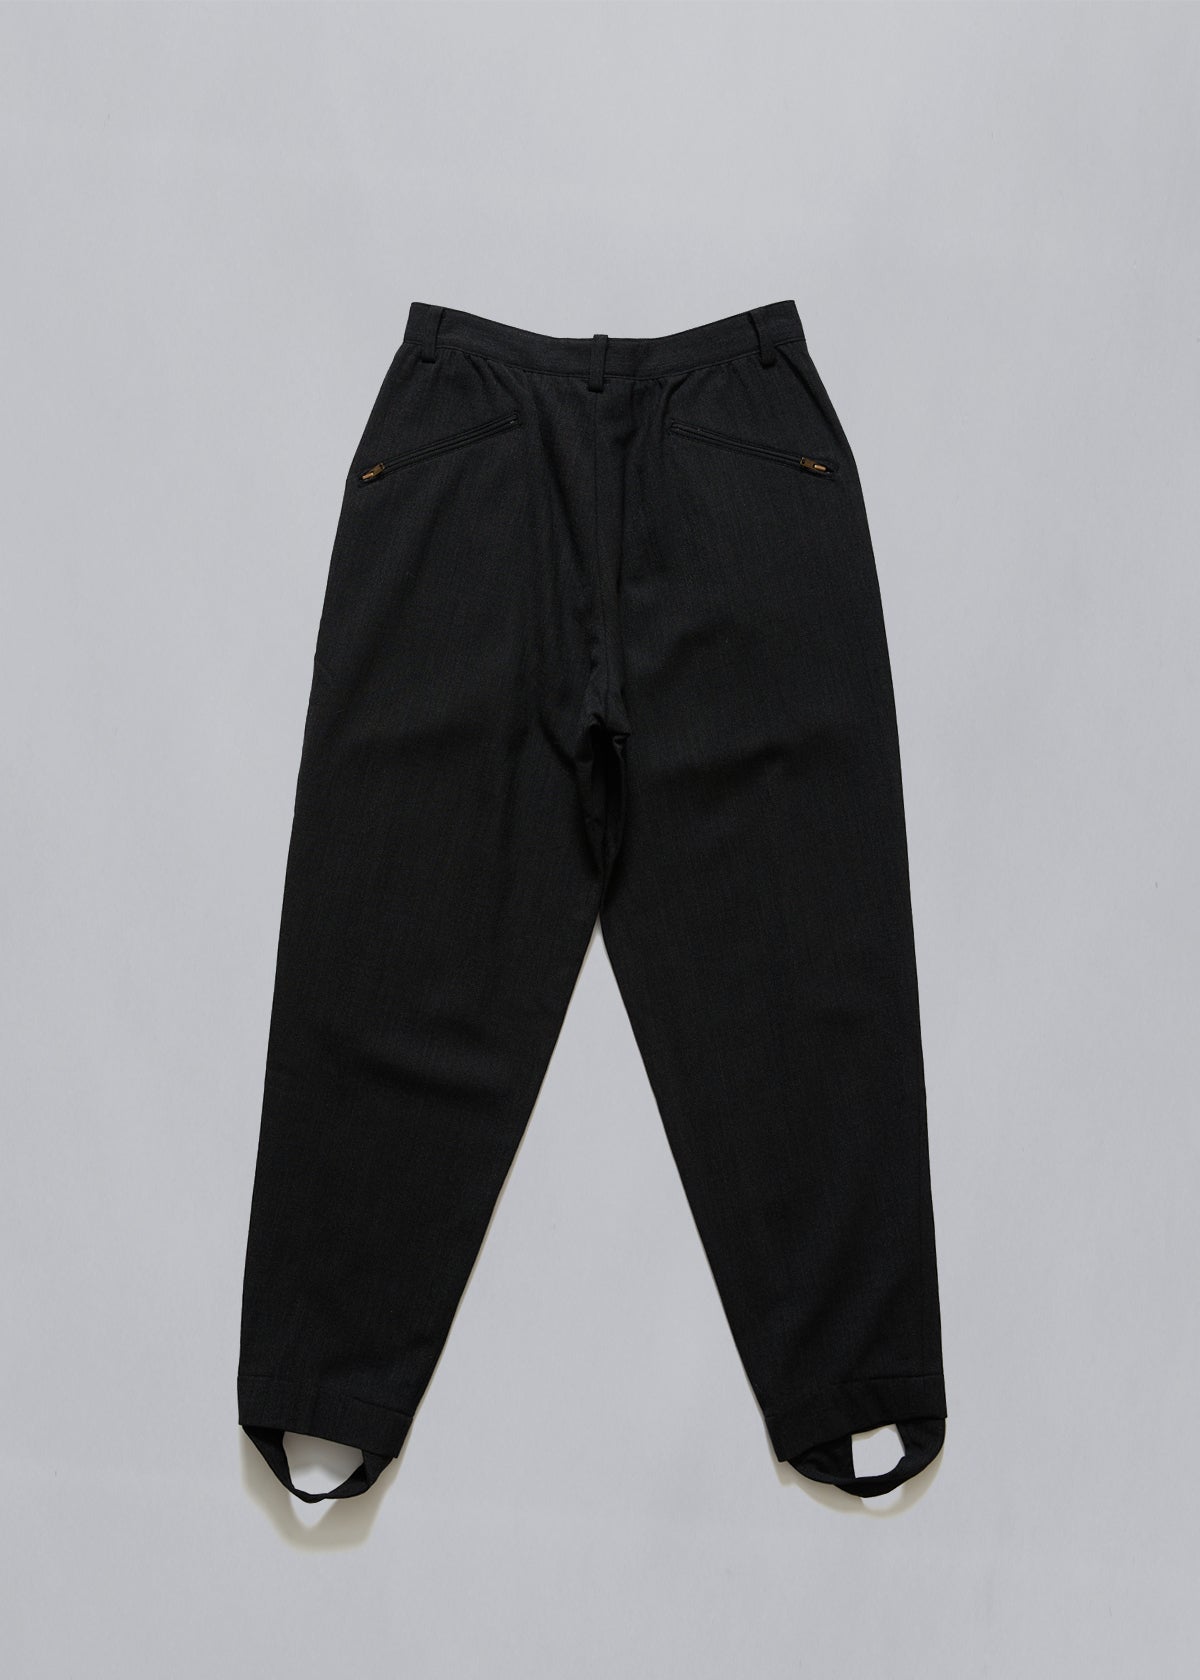 4 Zip Pockets Wool Pants 1980's - Medium